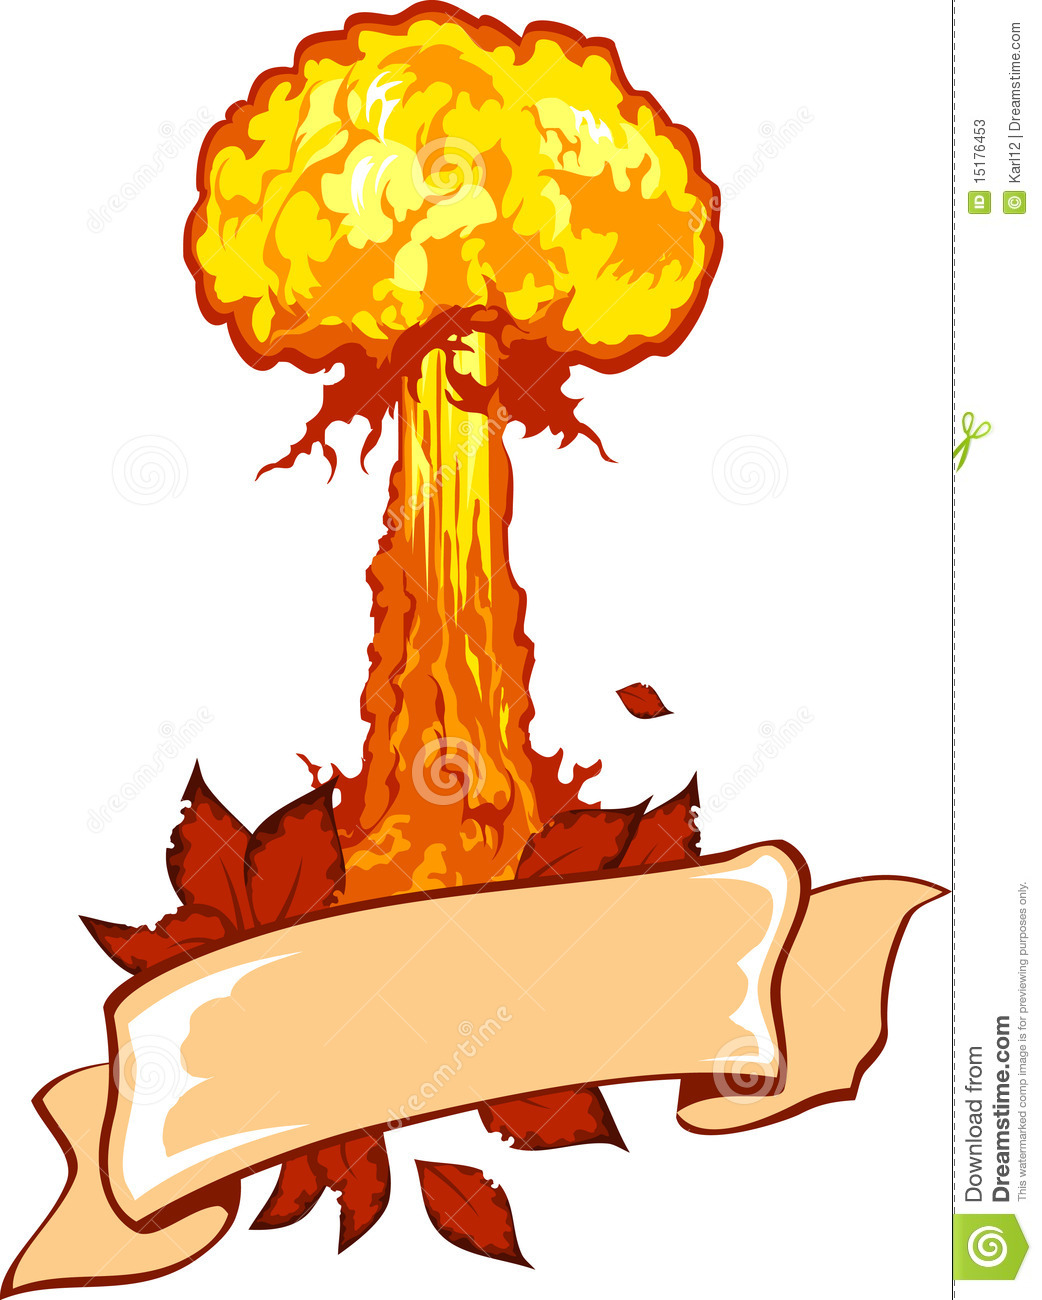 Nuclear Explosion Stock Photos   Image  15176453